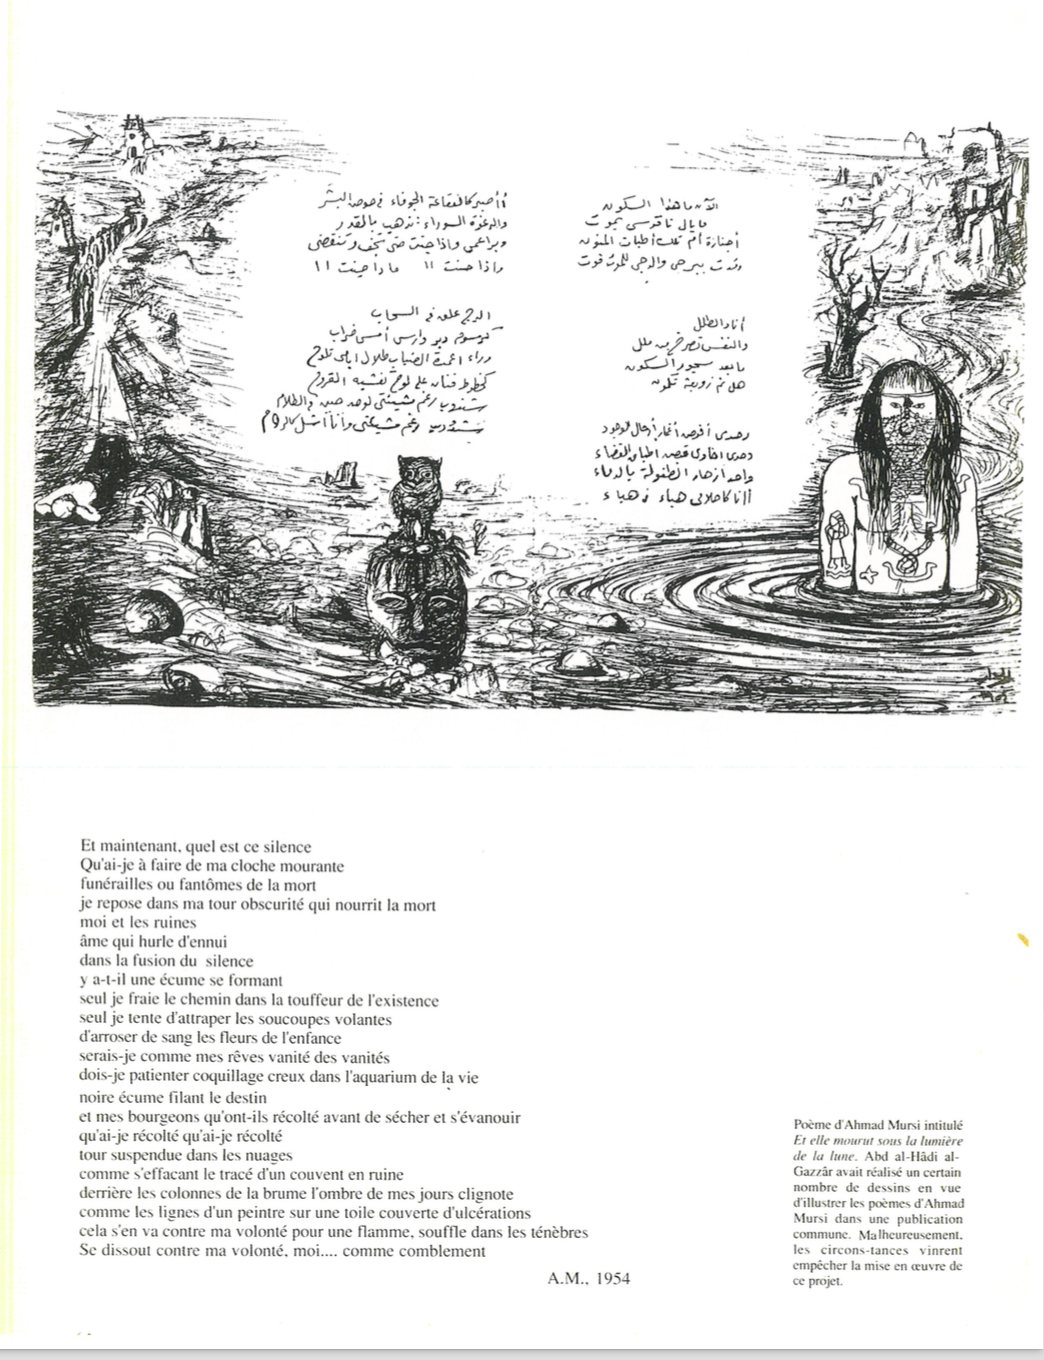 Morsi poetry & Gazzar drawings